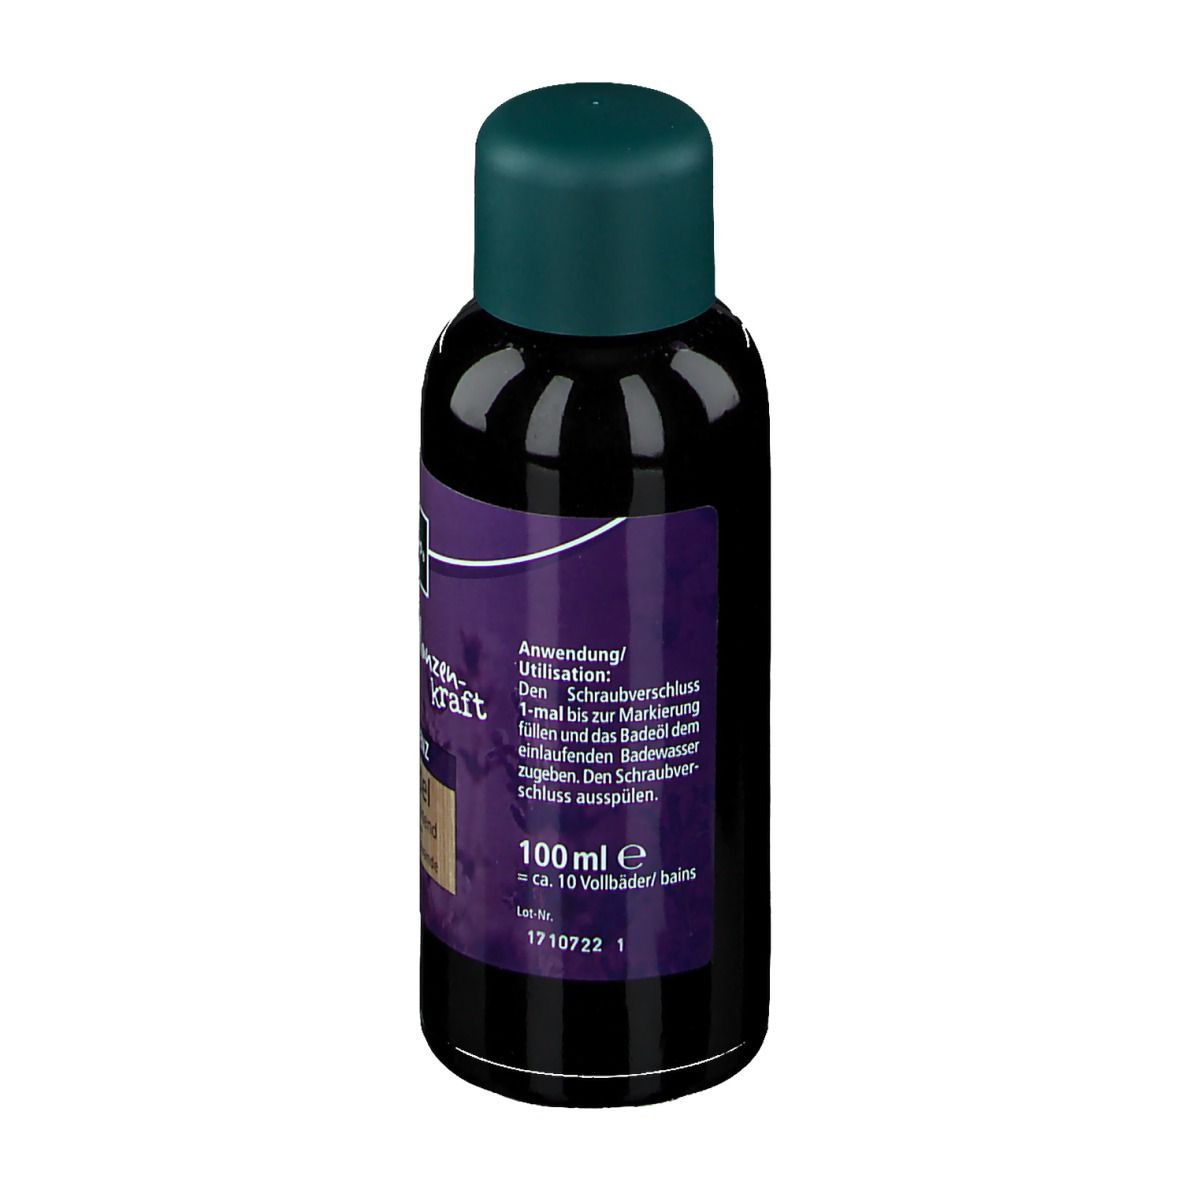 Kneipp® Bade-Essenz Pflanzenkraft Lavendel